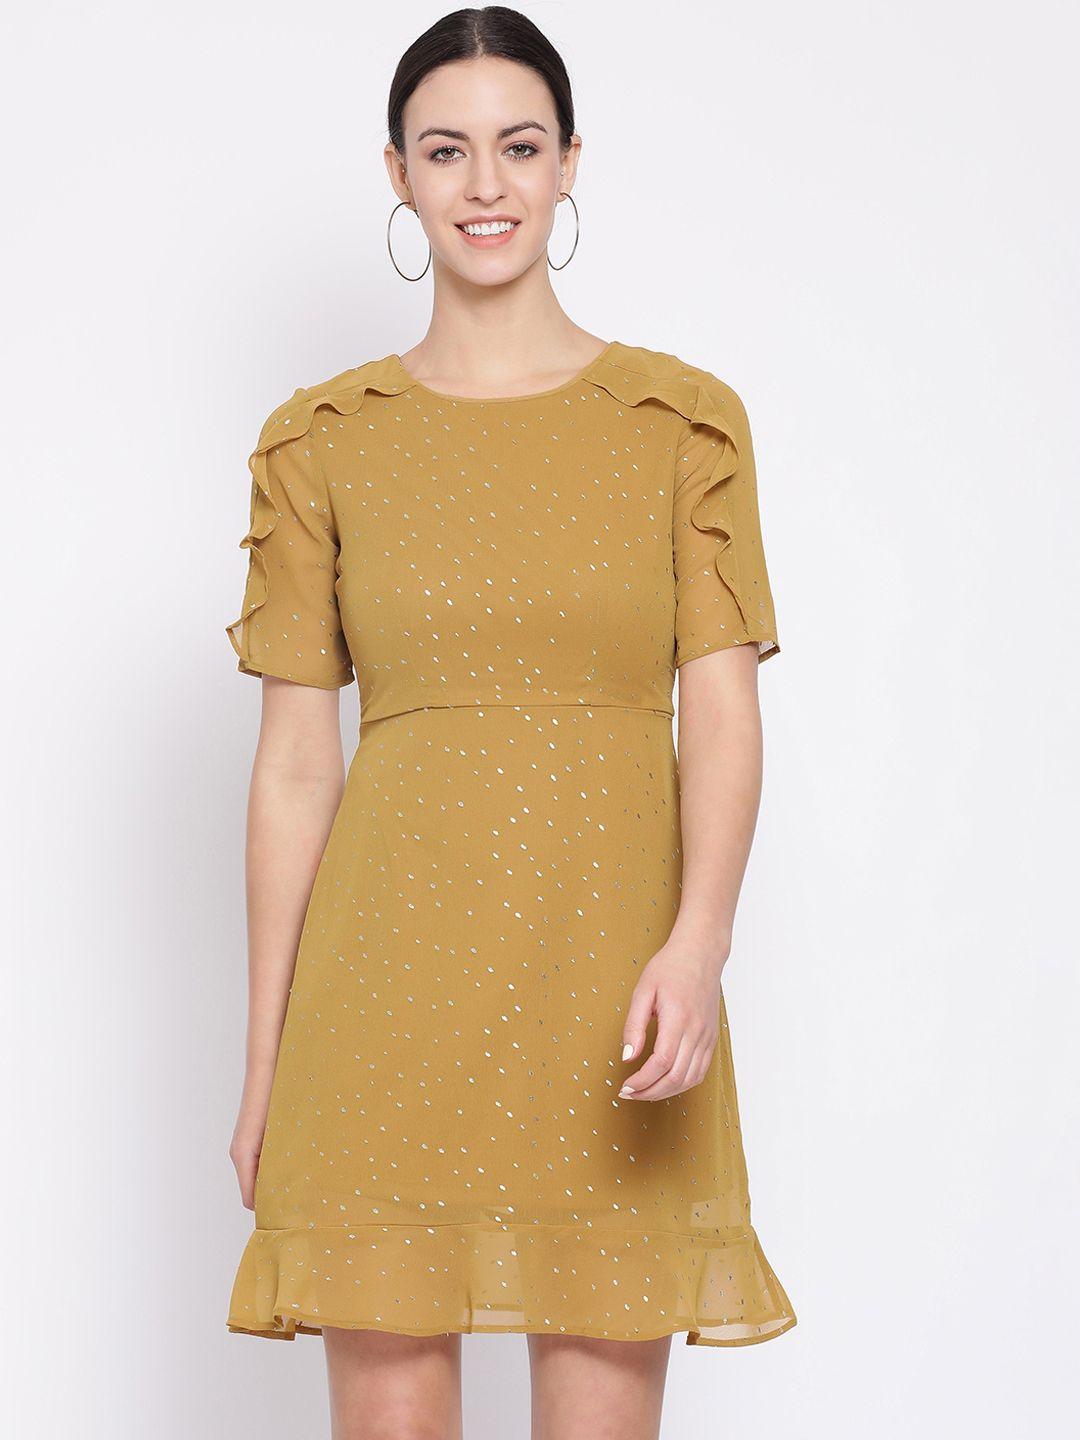 oxolloxo women mustard yellow printed a-line dress